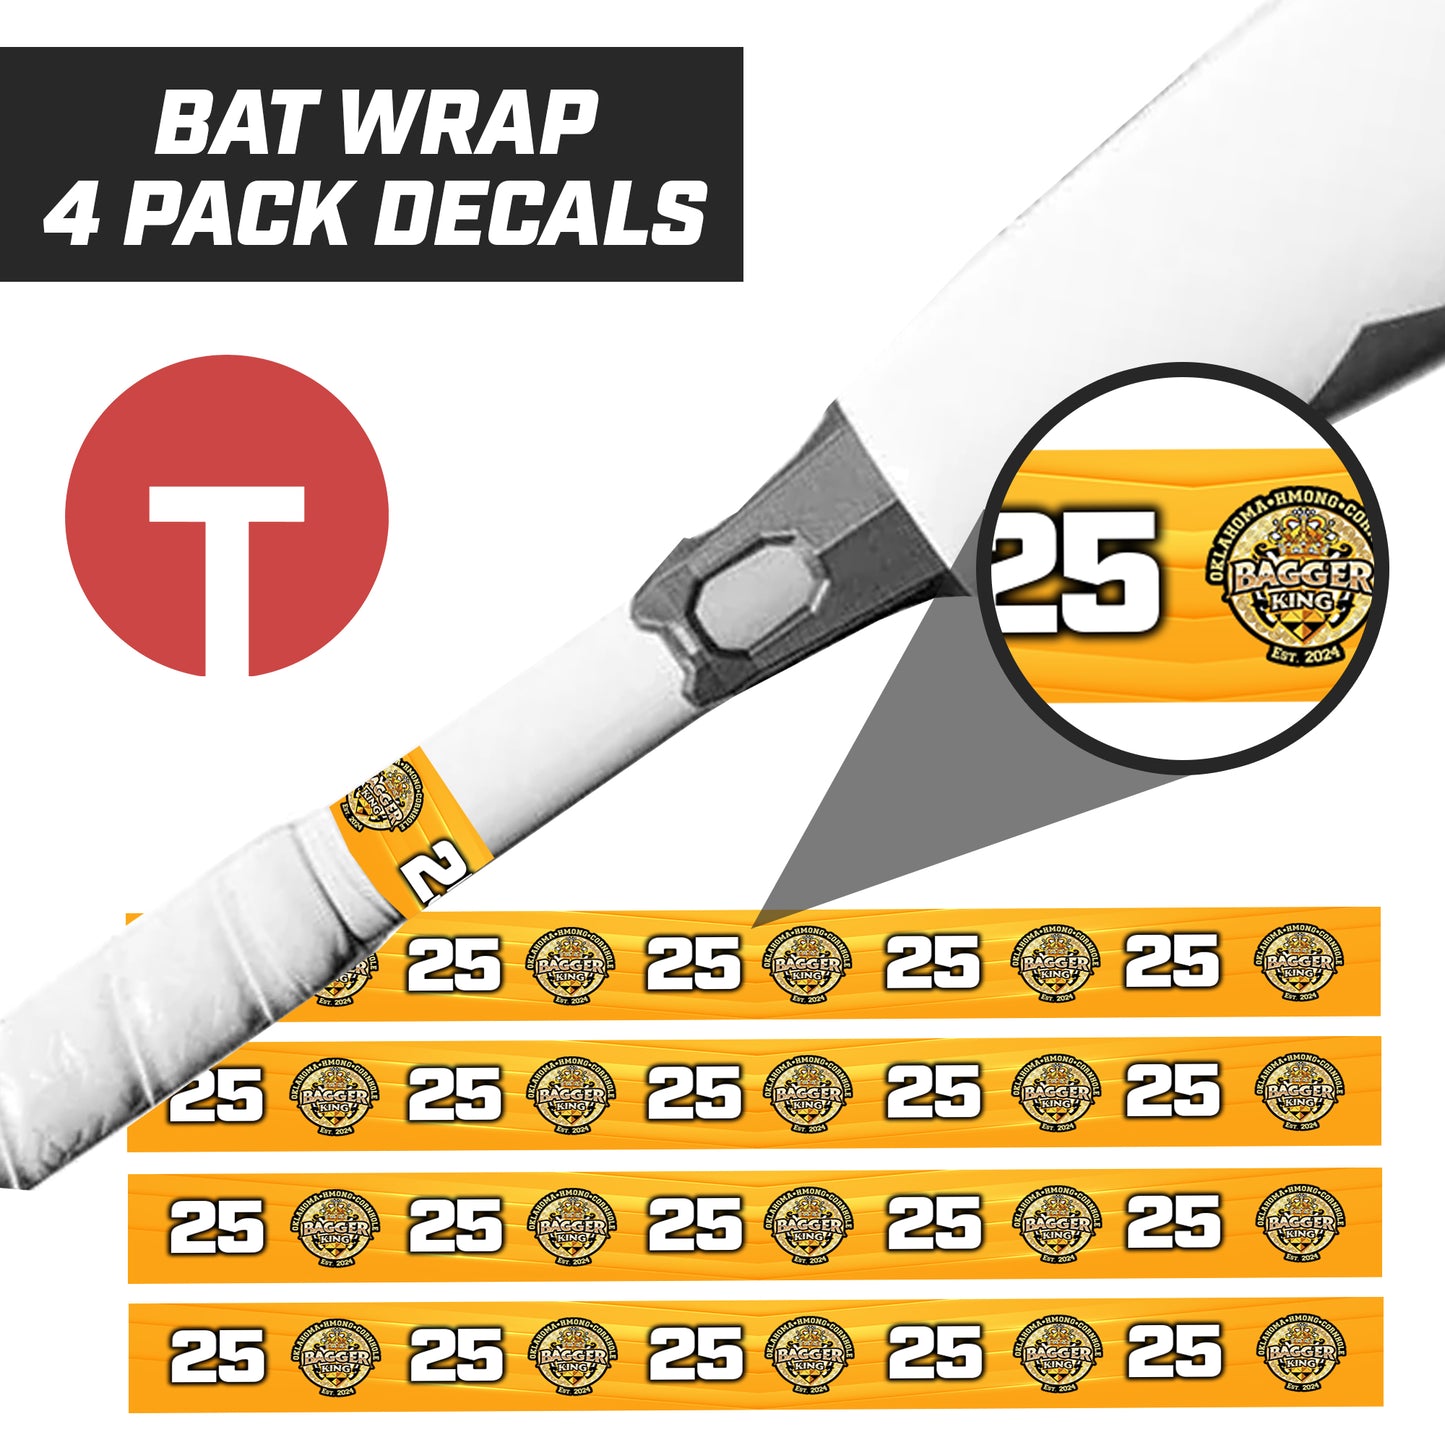 Bagger King - Oklahoma Hmong Cornhole - Bat Decal Wraps (4 Pack)